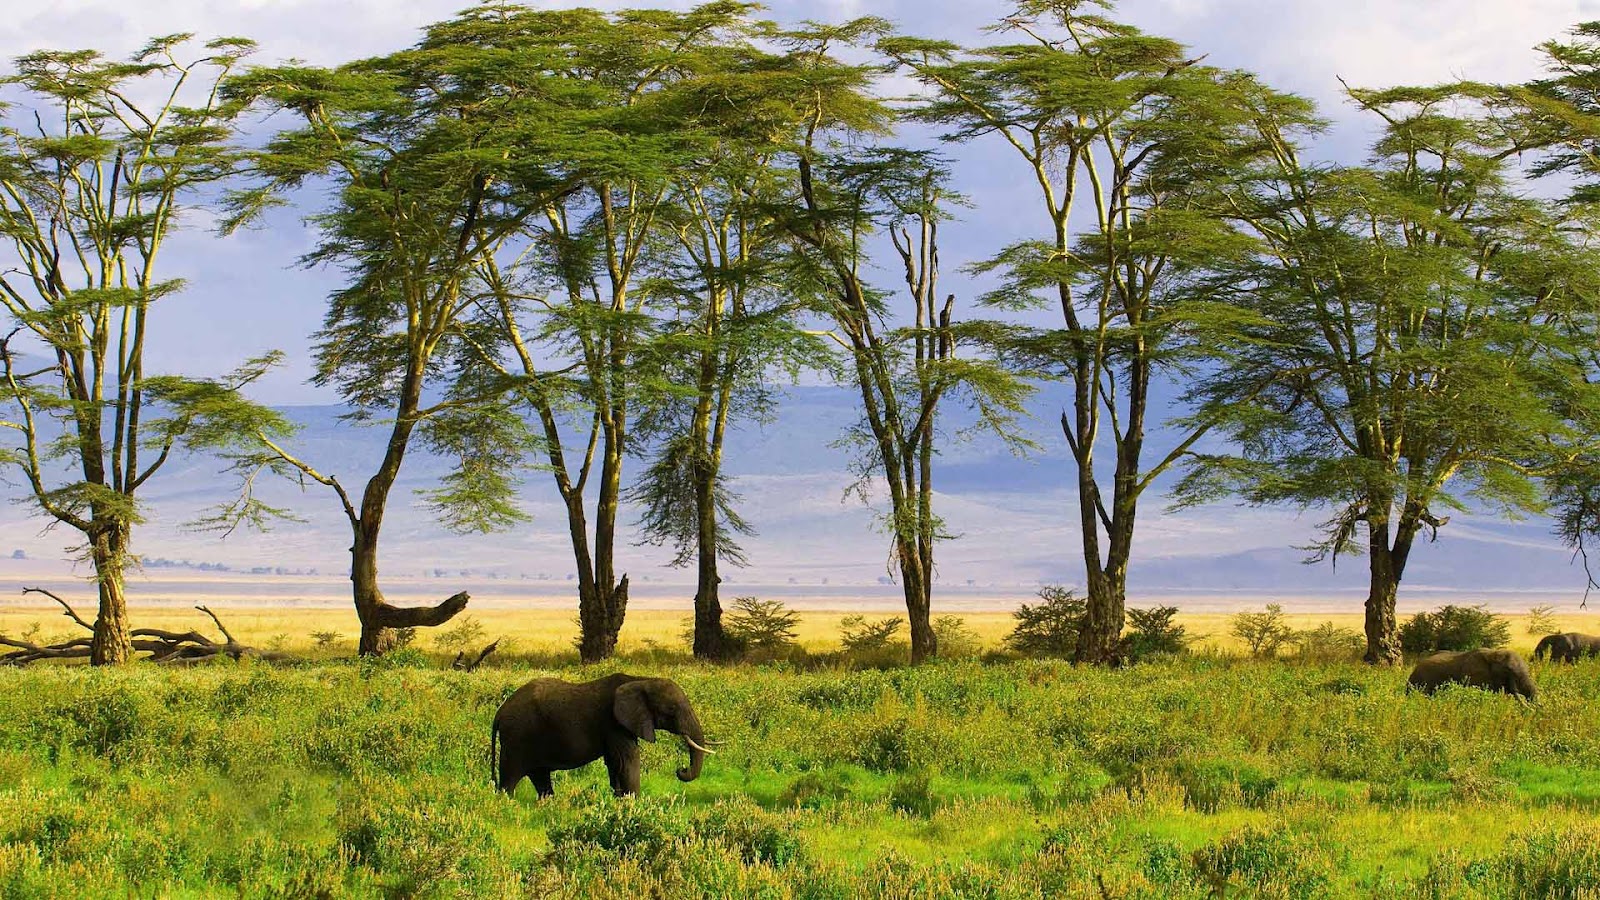 HD Elephants Wallpaper And Photos Animals